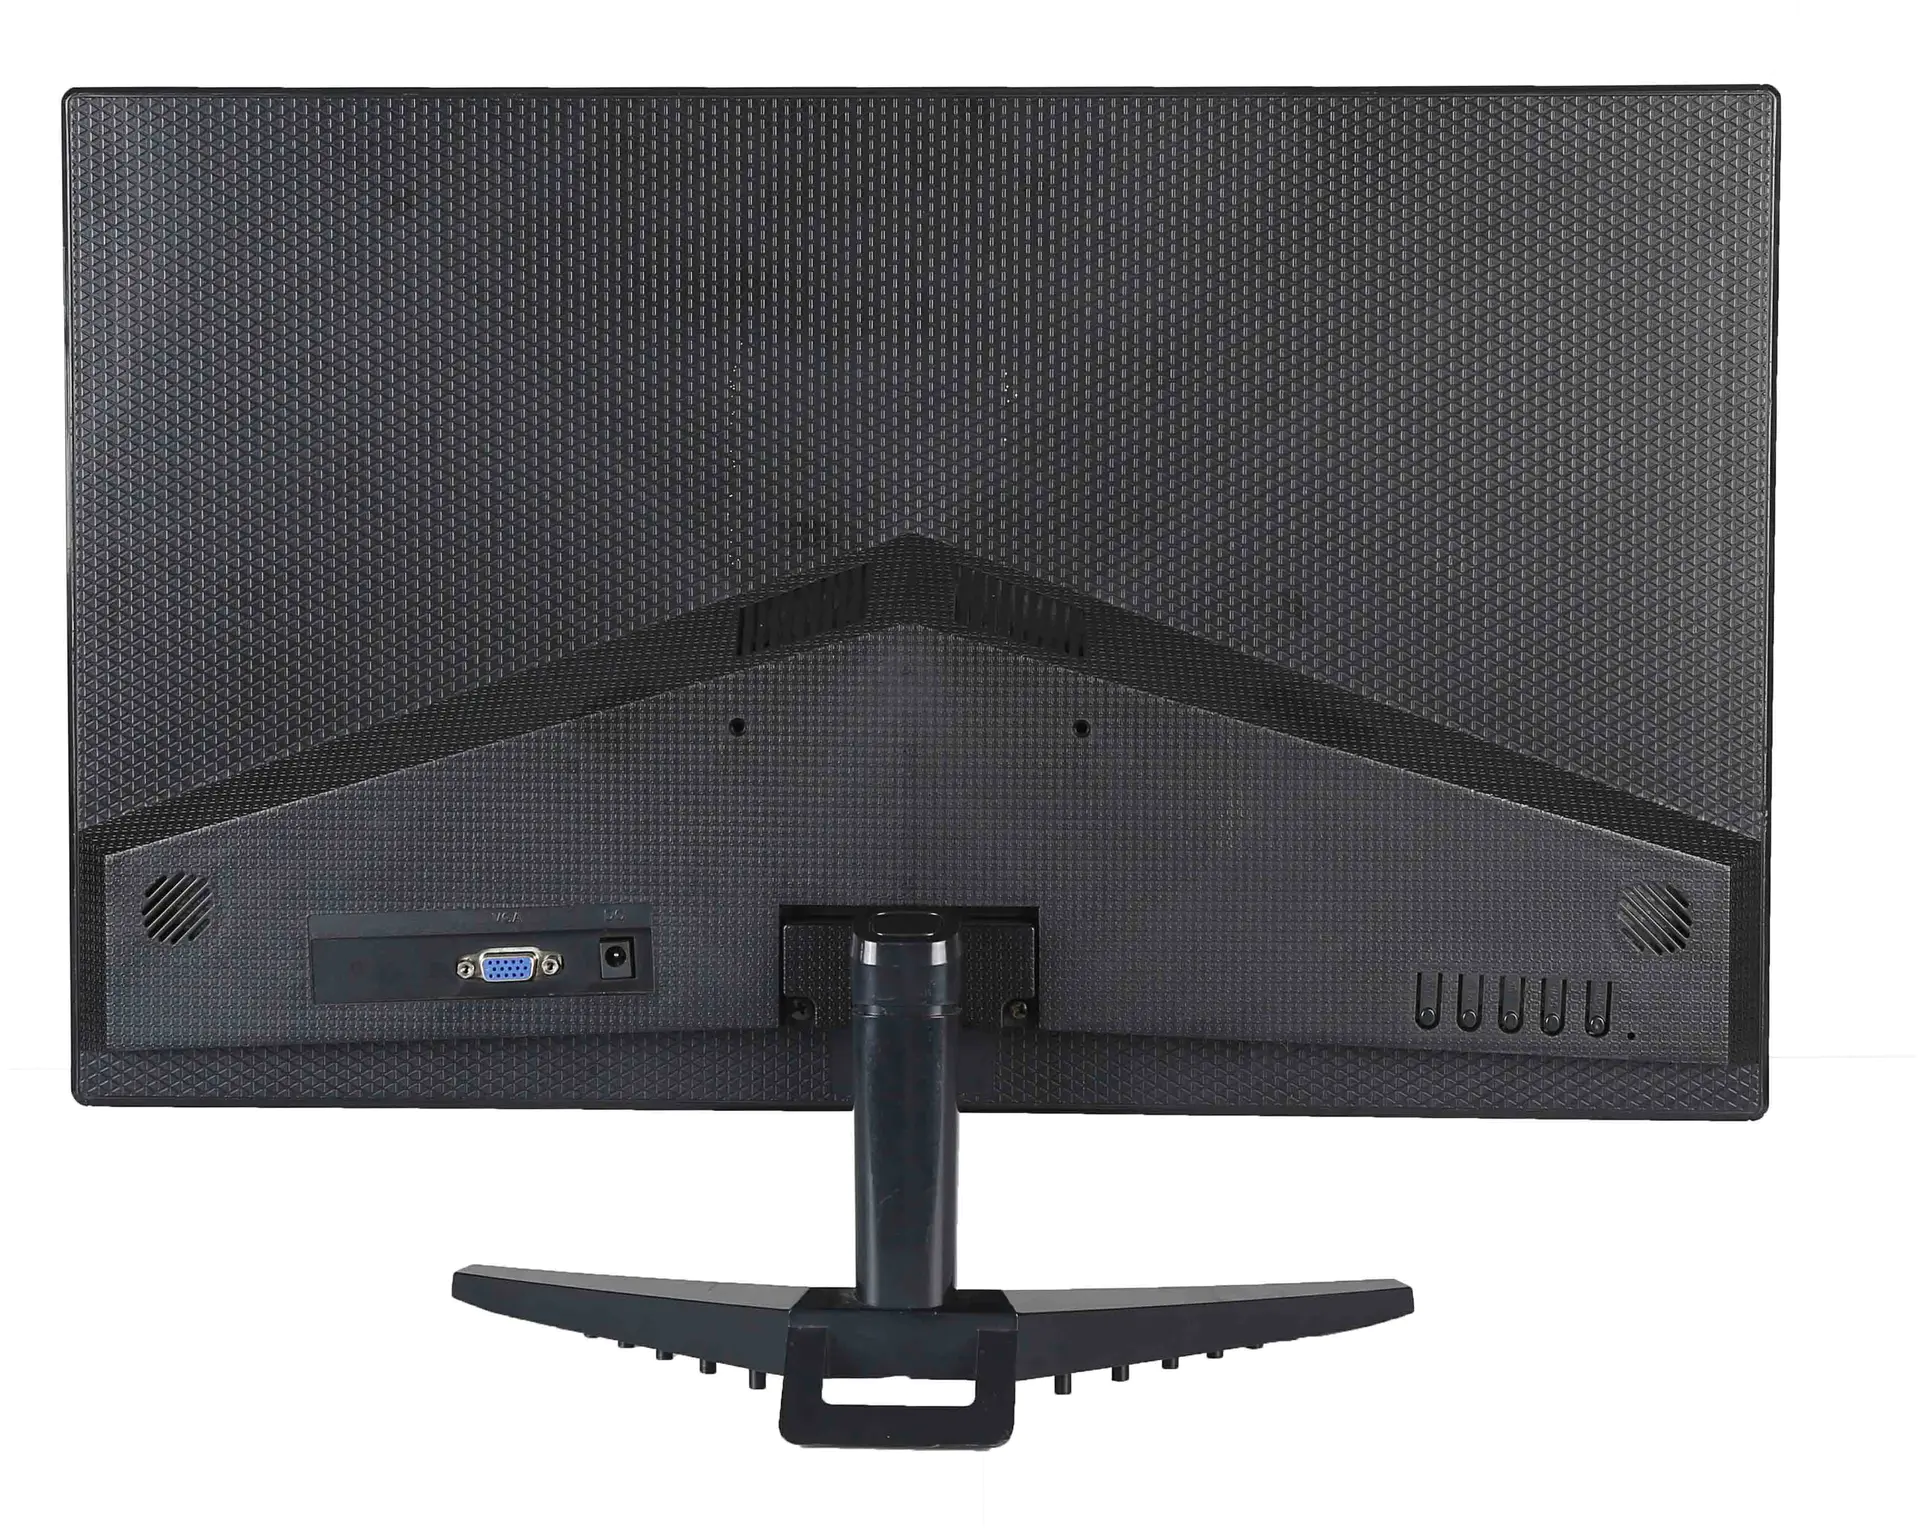 OEM brand 1080P LED PC monitor 23.6/24 inch Widescreen HDMI/VGA computer monitor